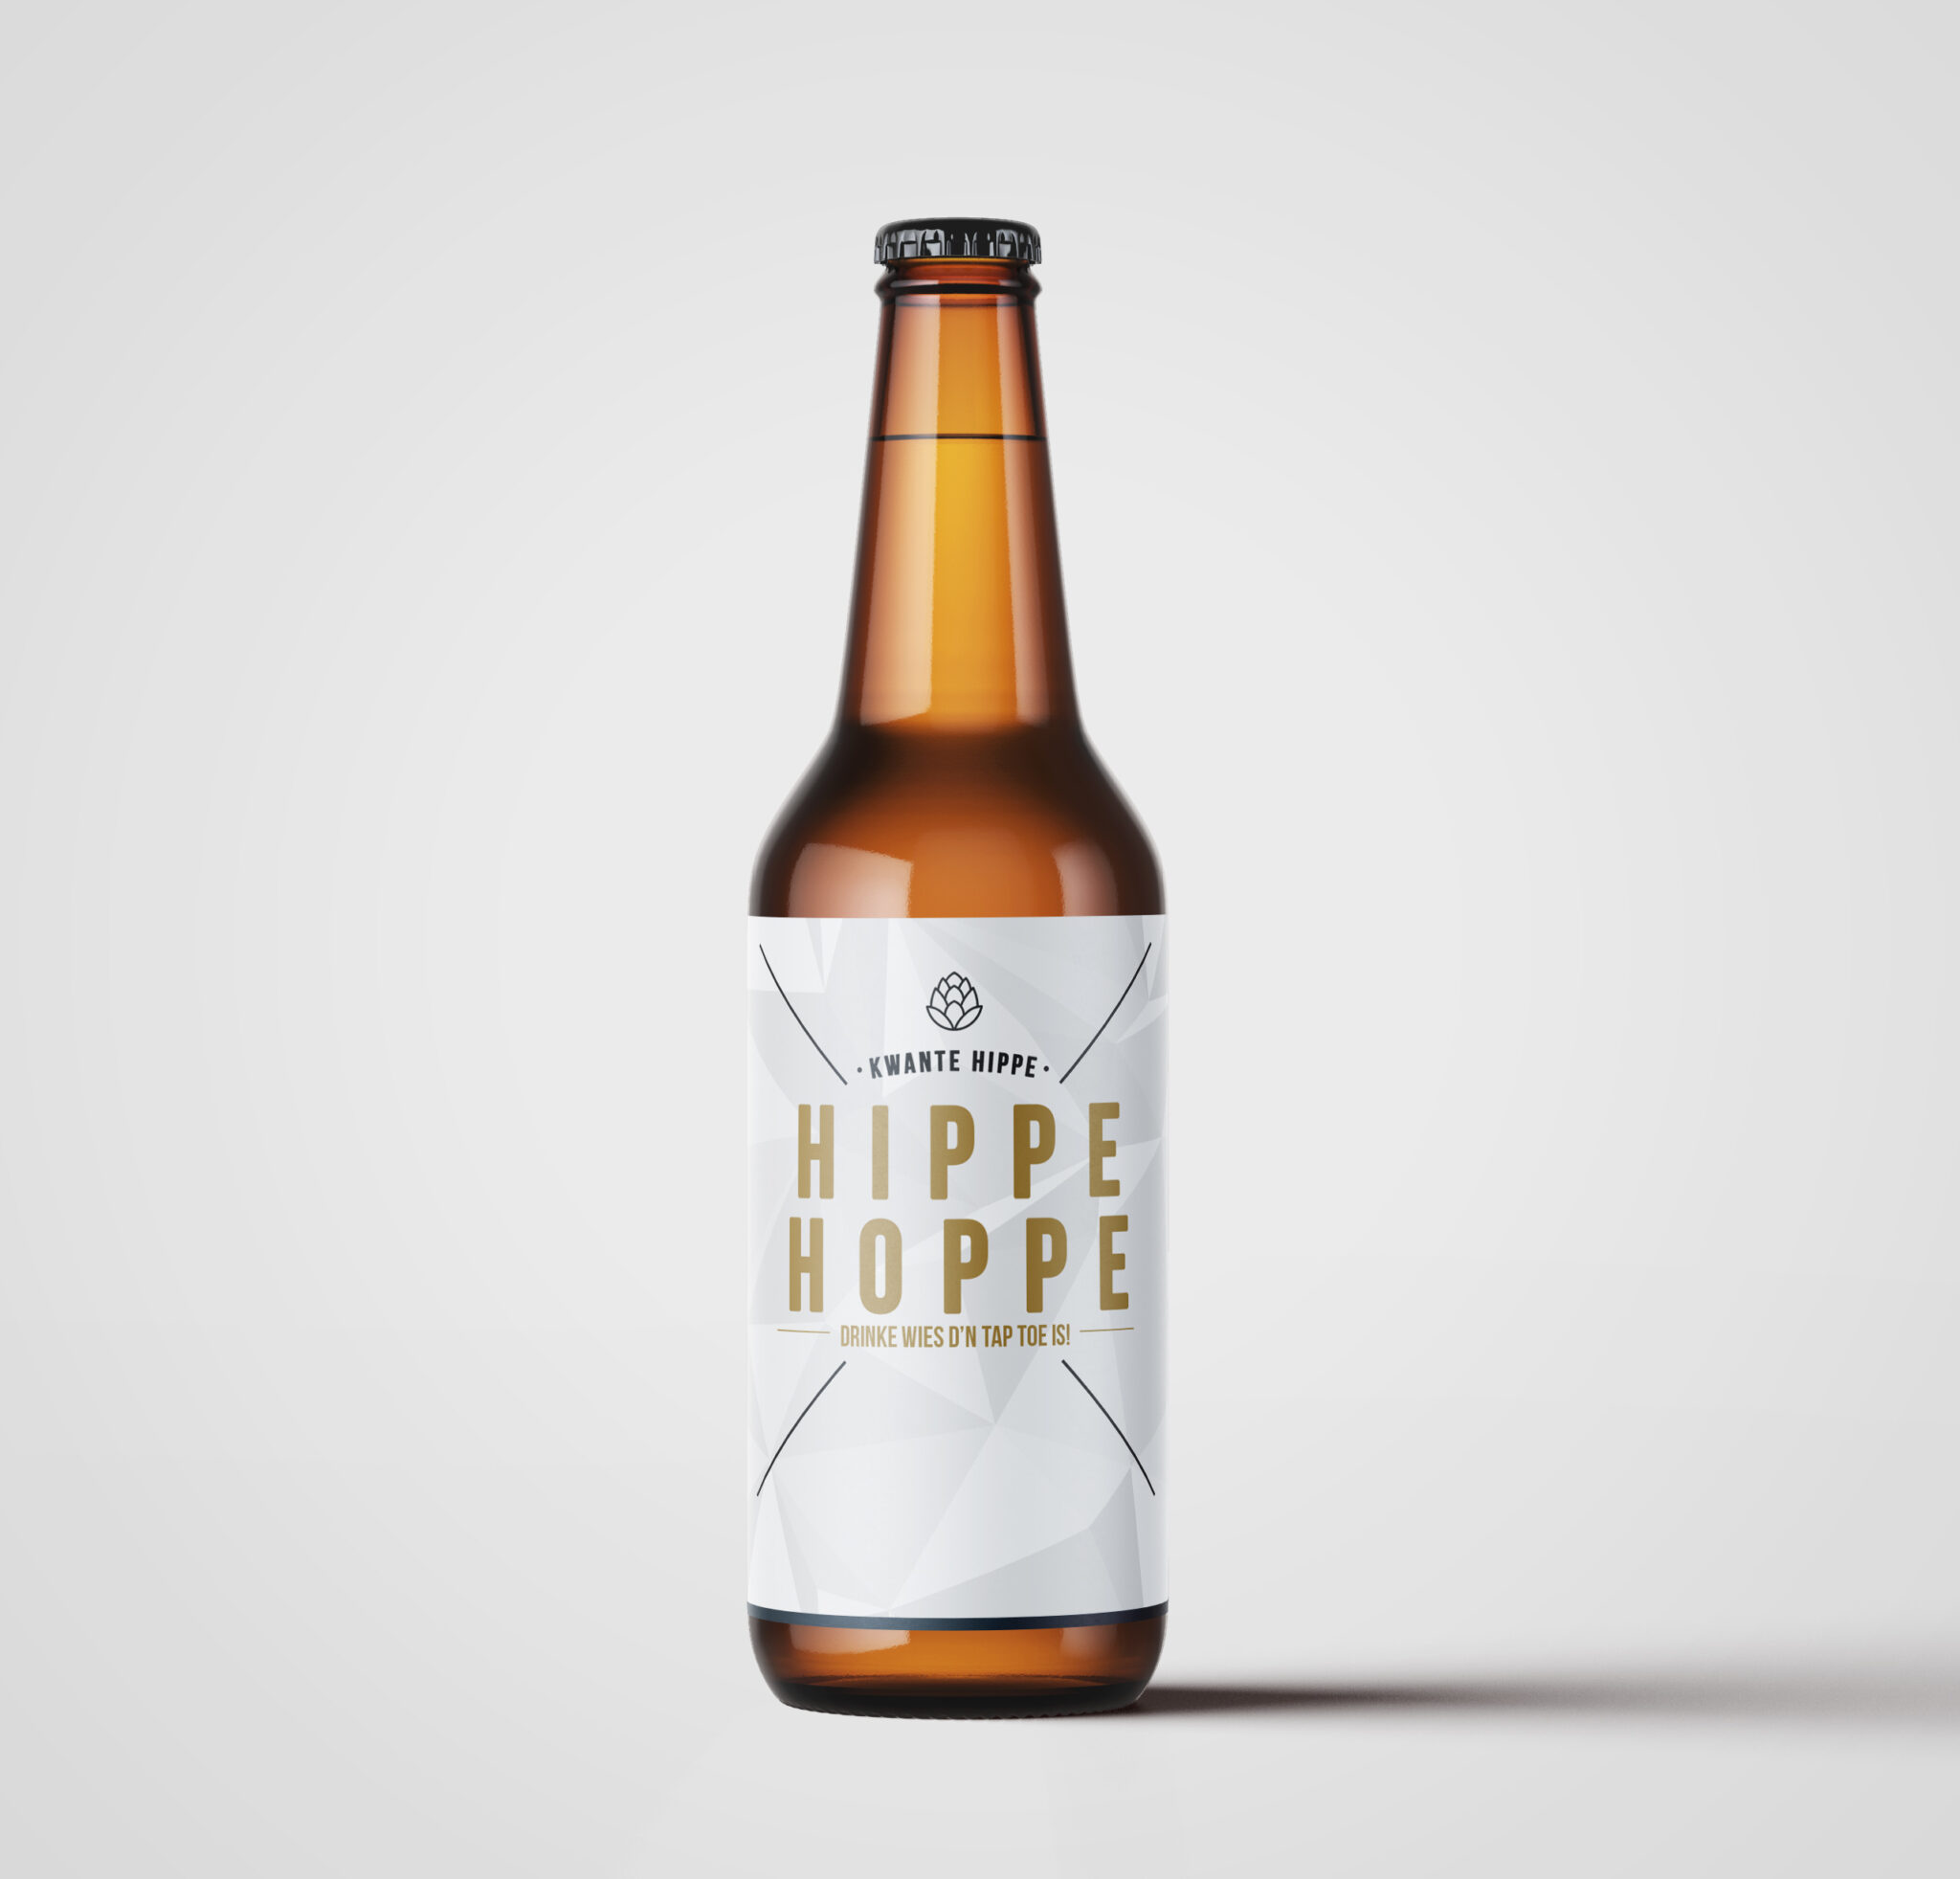 Hippe Hoppe - Kwante Hippe bier